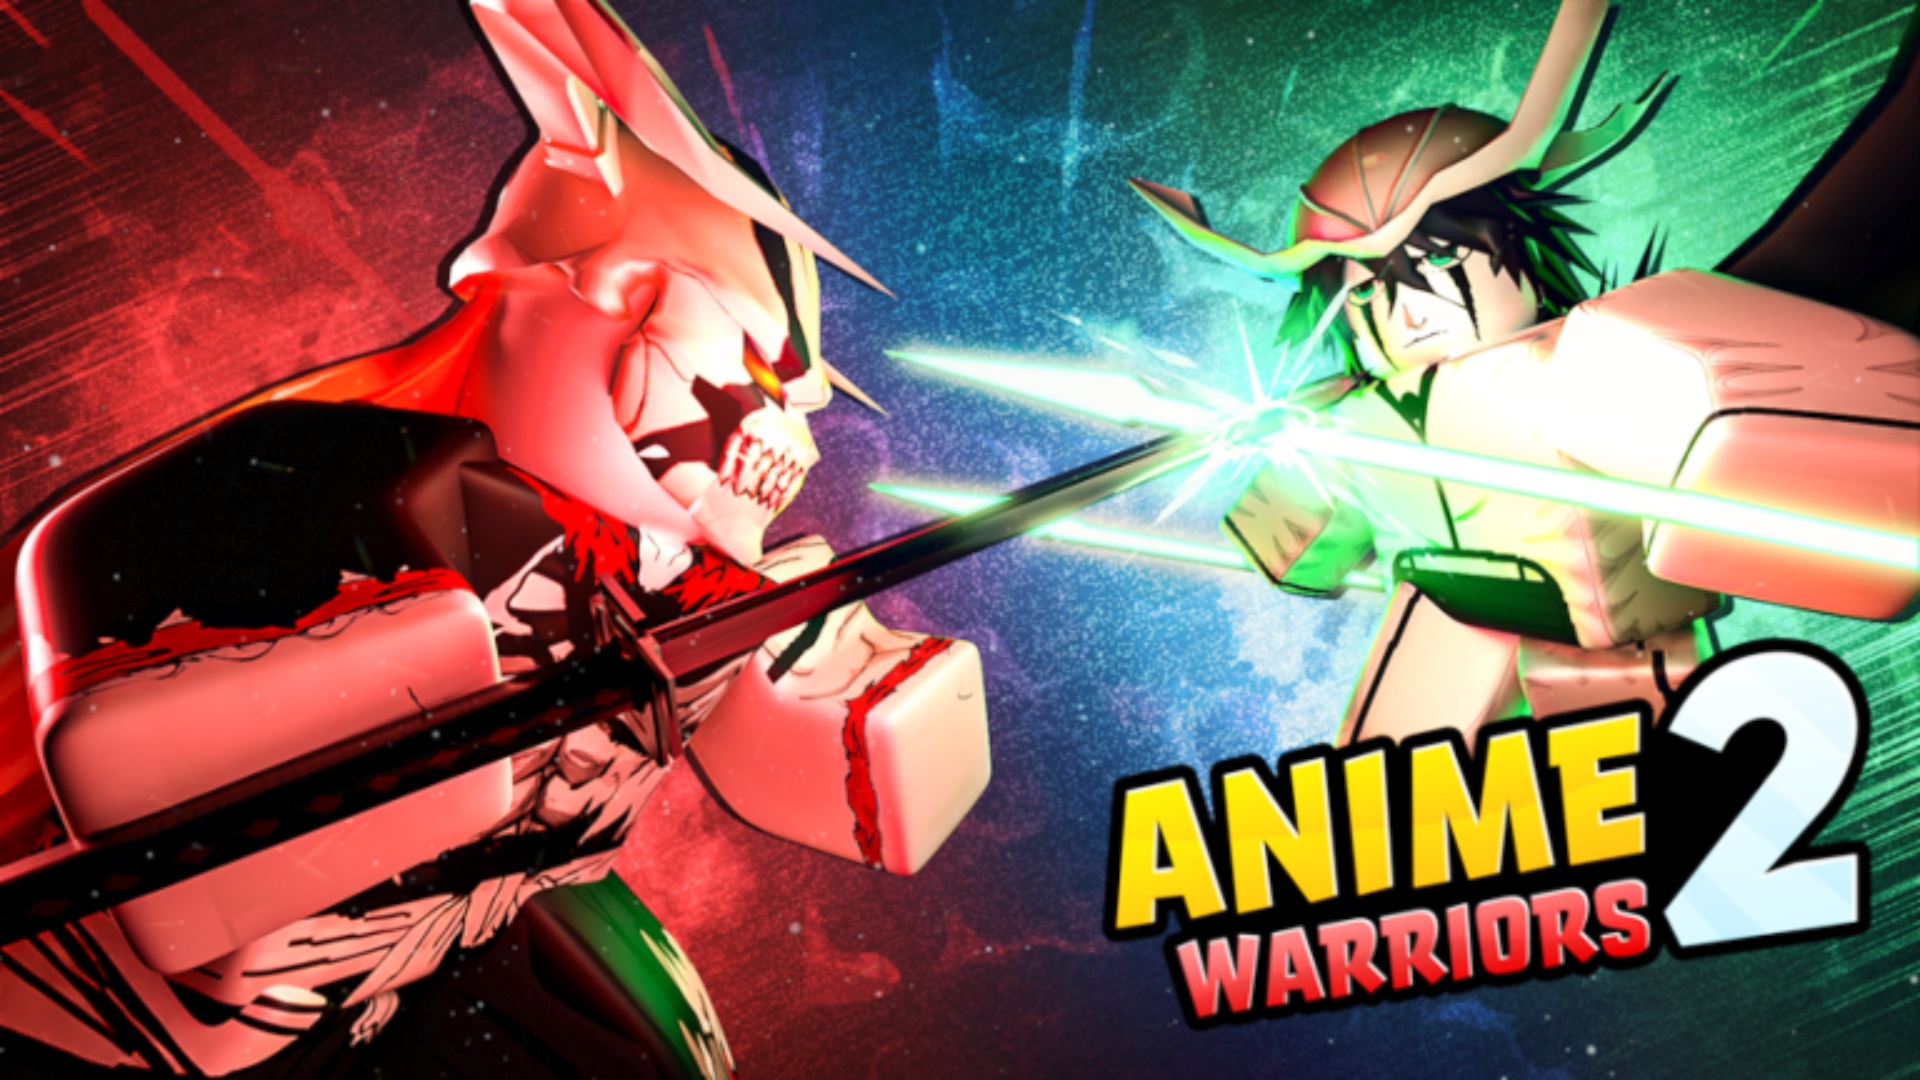 Anime Warriors AnimeWarriorsBZ  Twitter